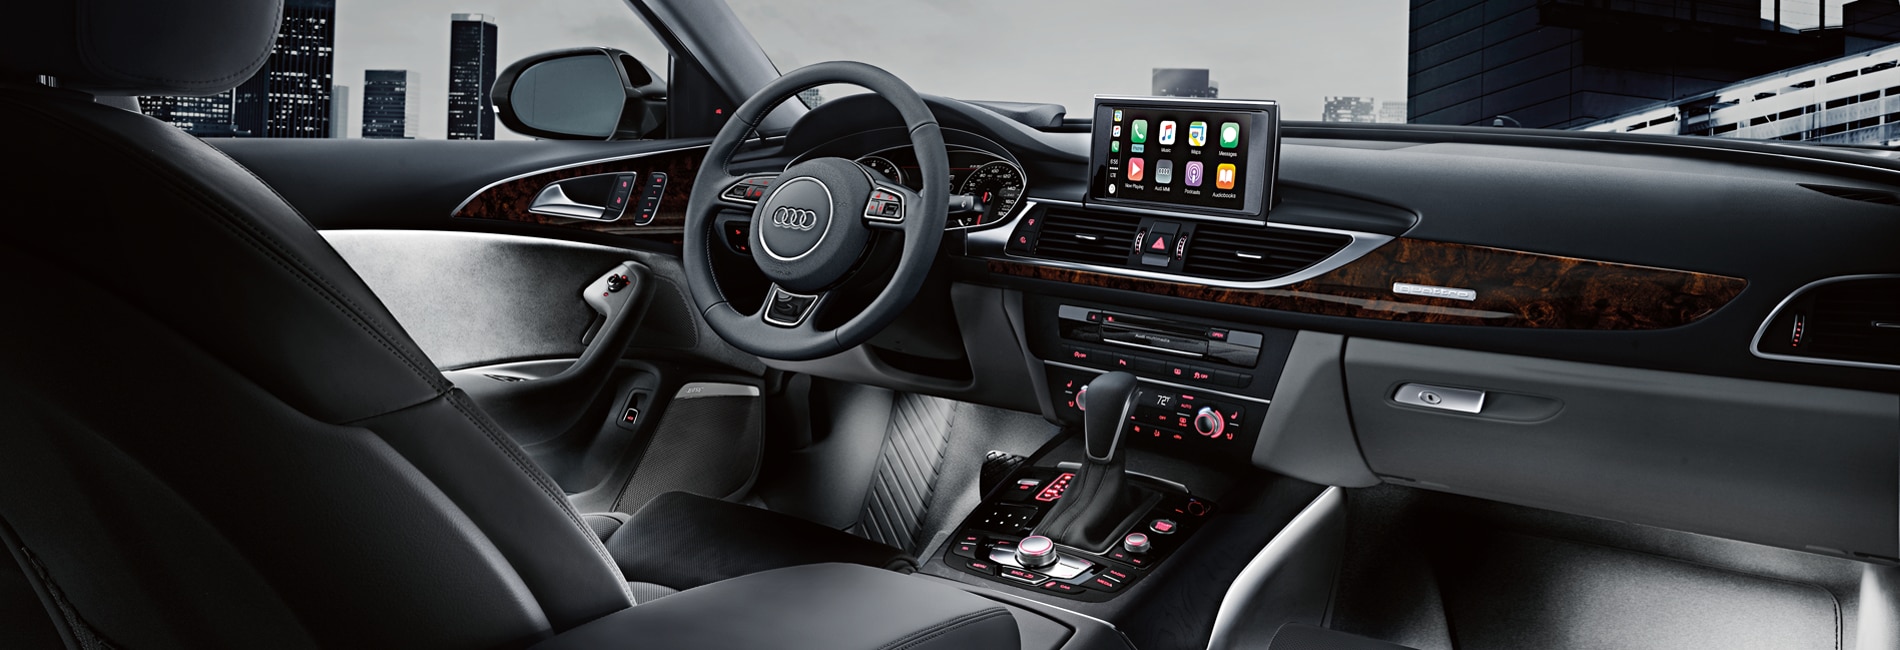 Audi A6 Interior Front